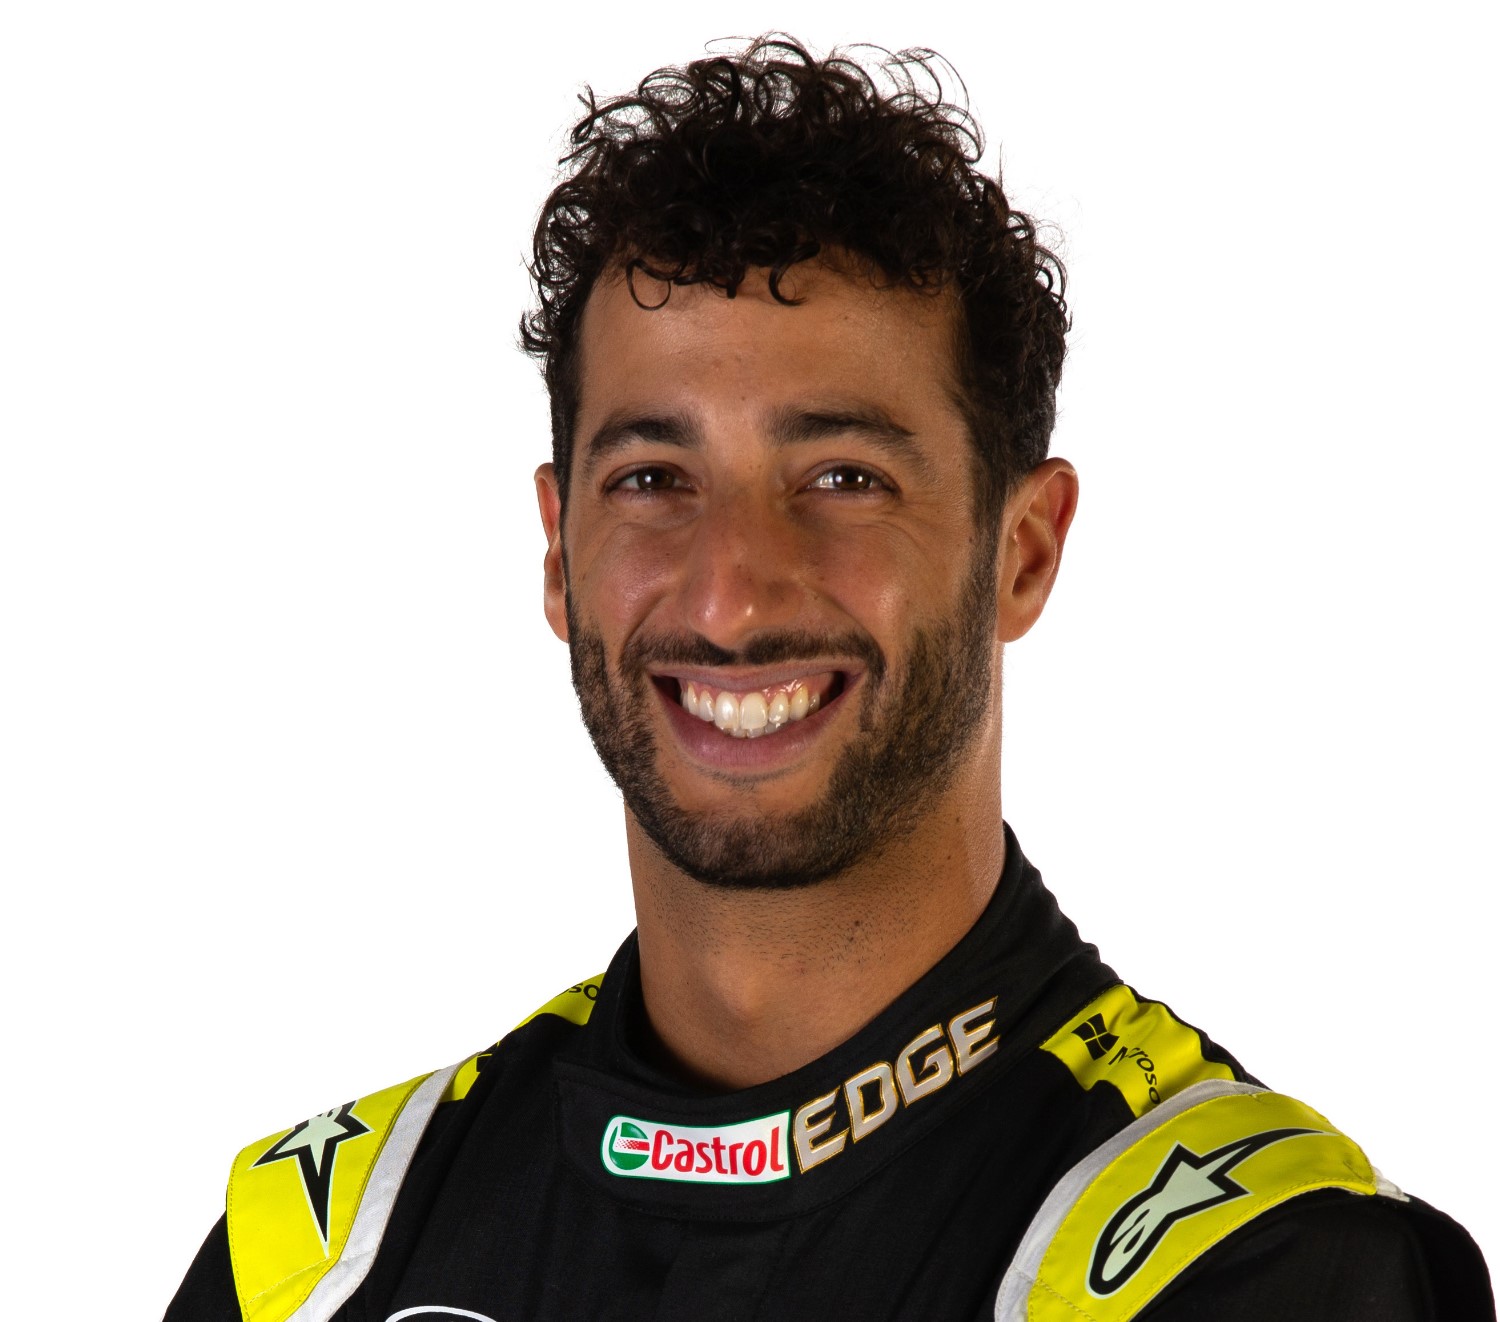 Daniel Ricciardo, still smiling all the way to the bank making $20 million a year